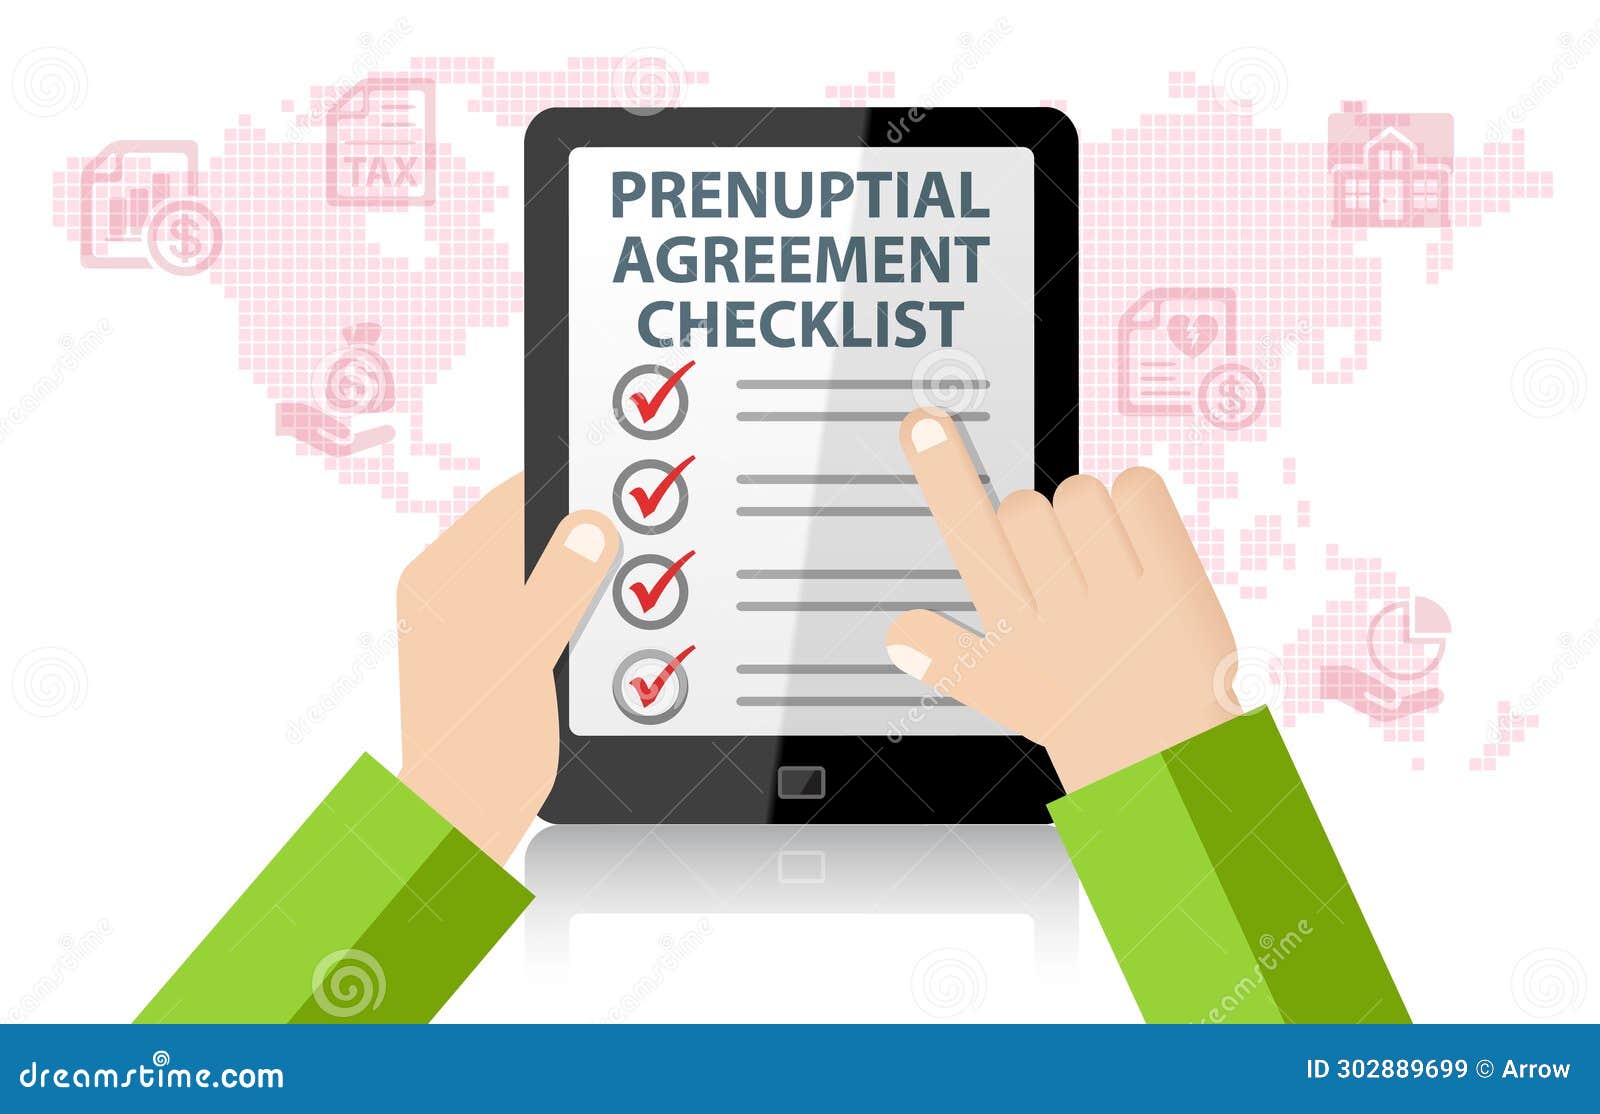 prenuptial agreement checklist infographic